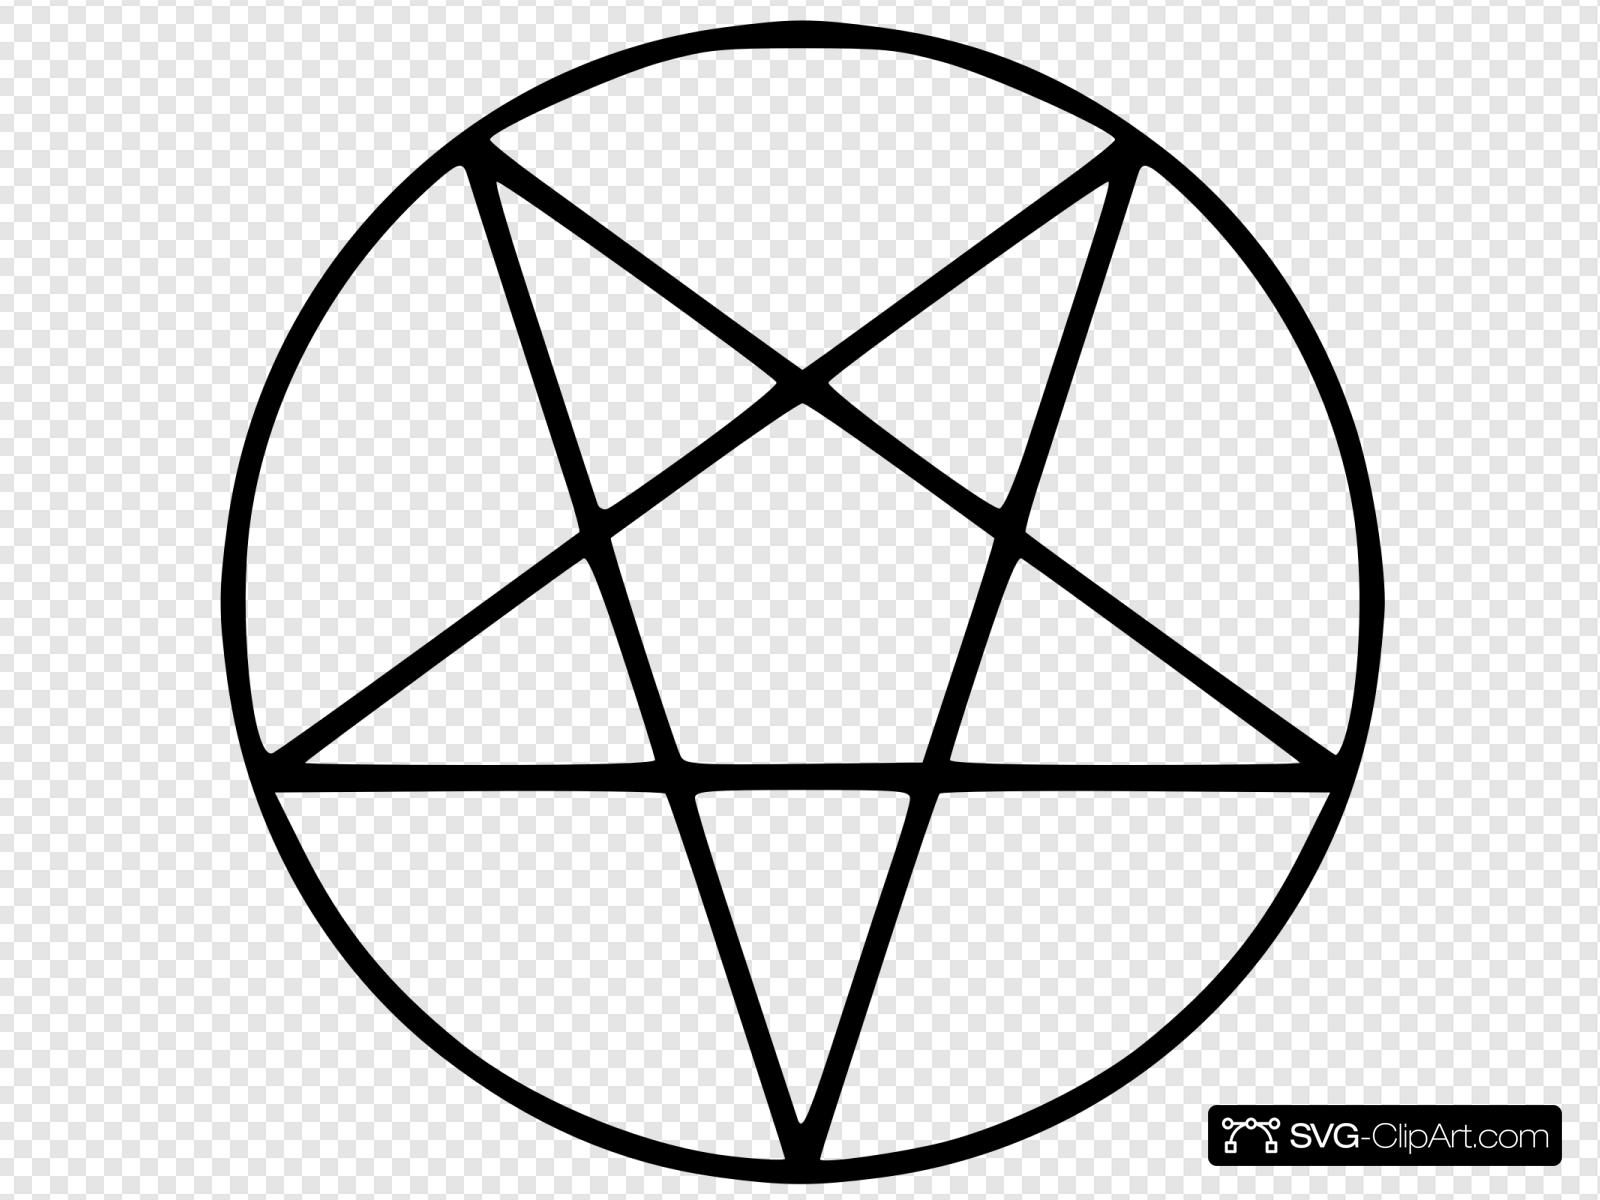 Pentagram clip art.